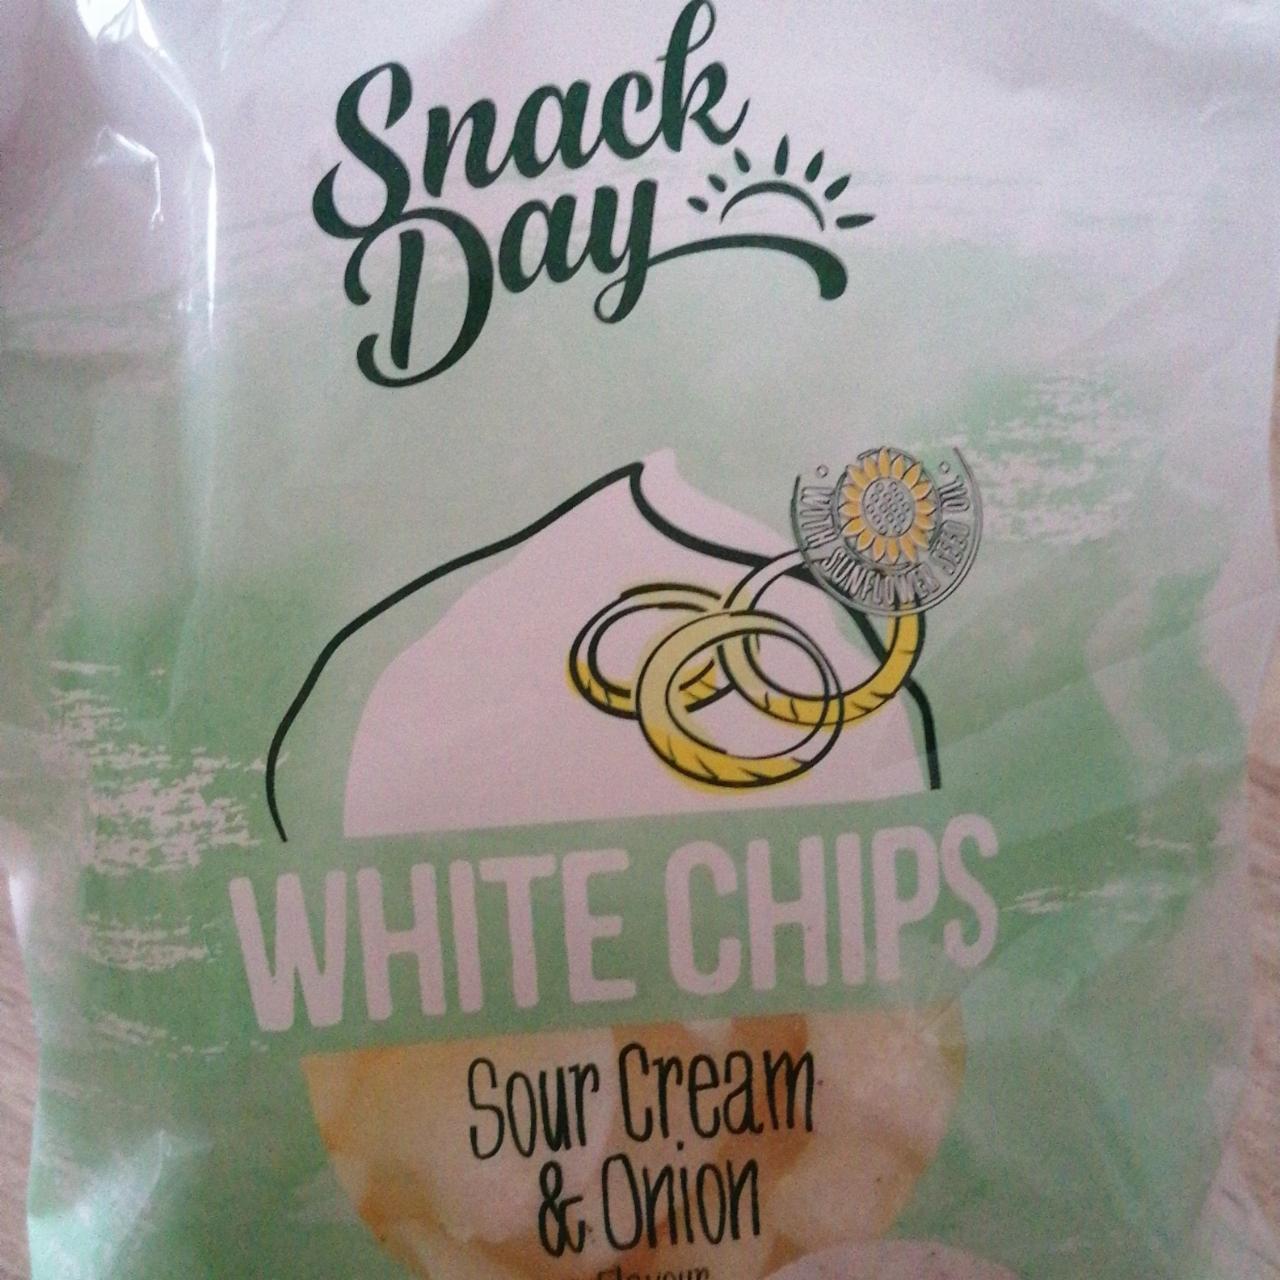 Fotografie - White Chips Sour Cream & Onion Snack Day